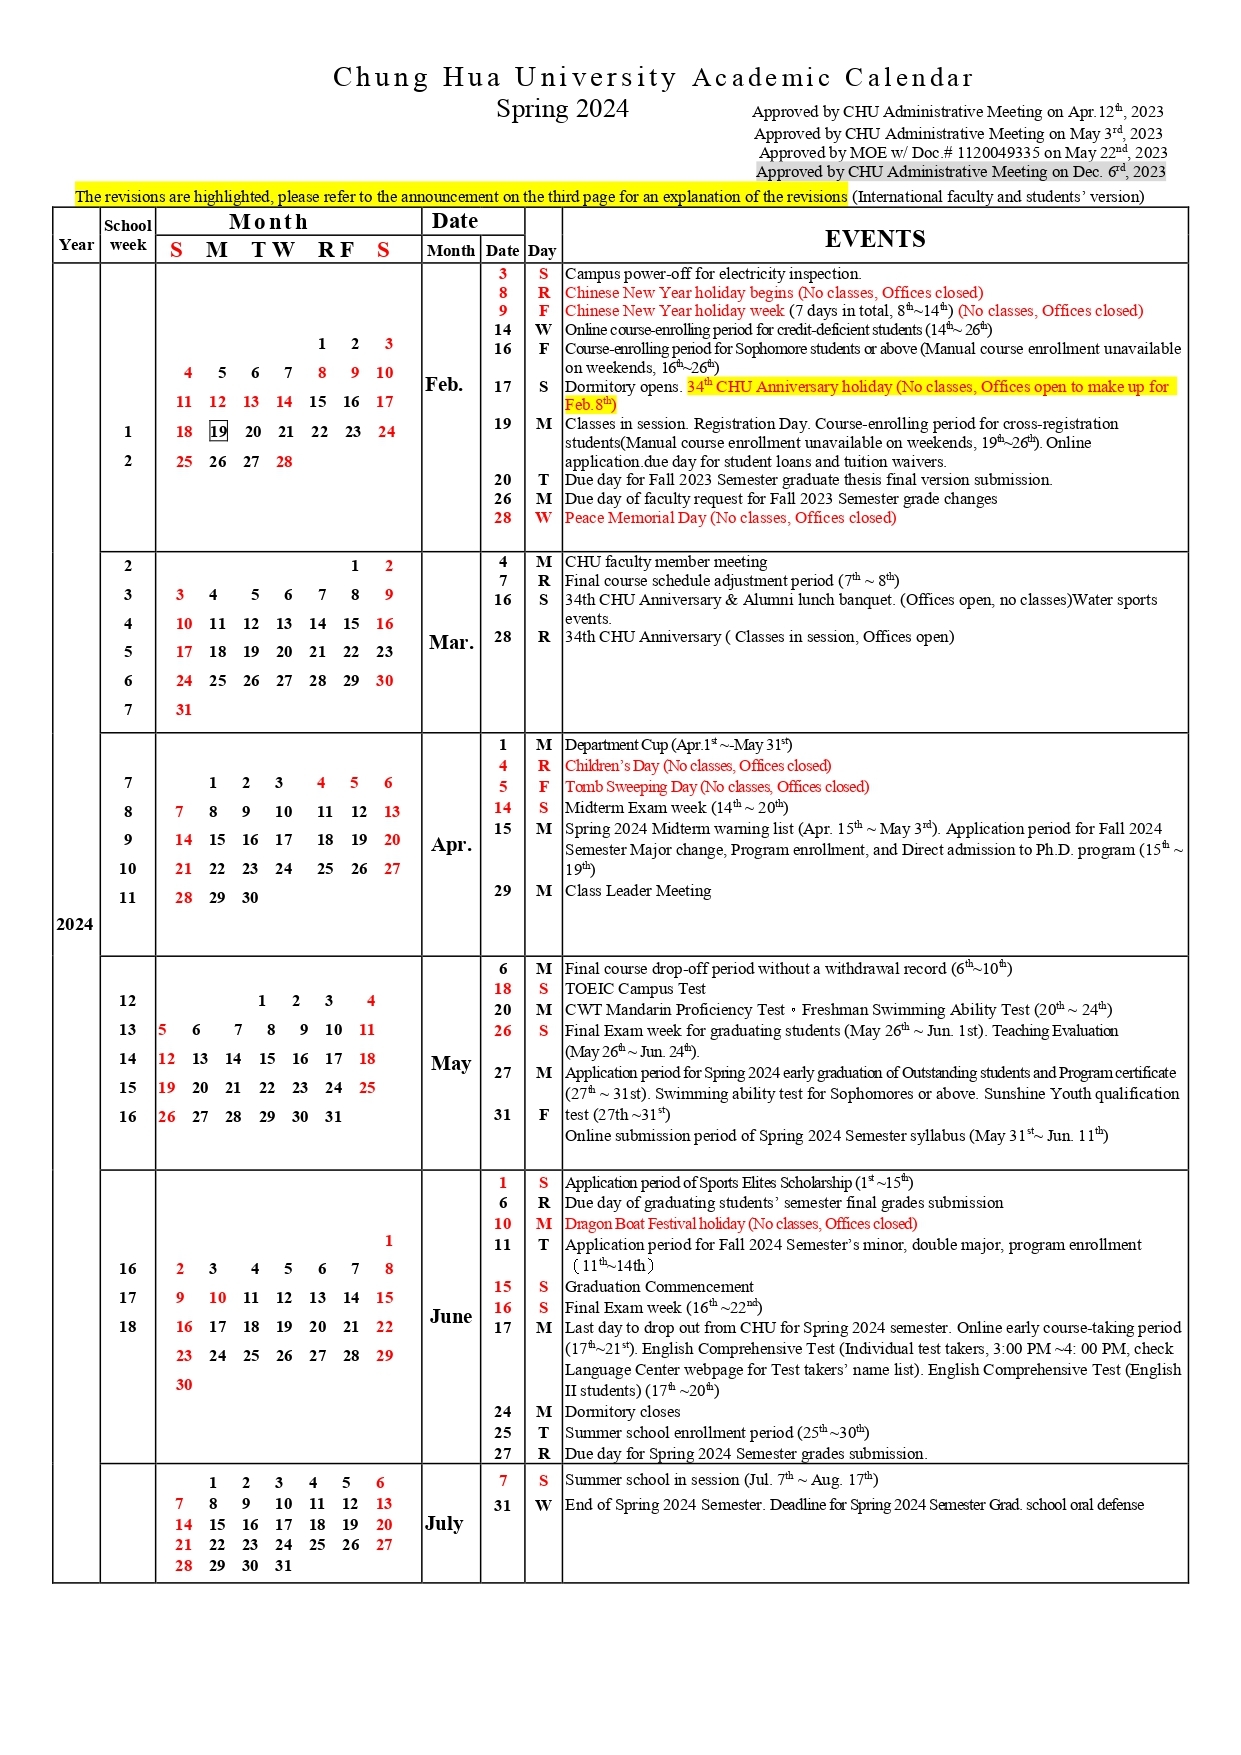 Chung Hua University Academic Calendar Fall 2023